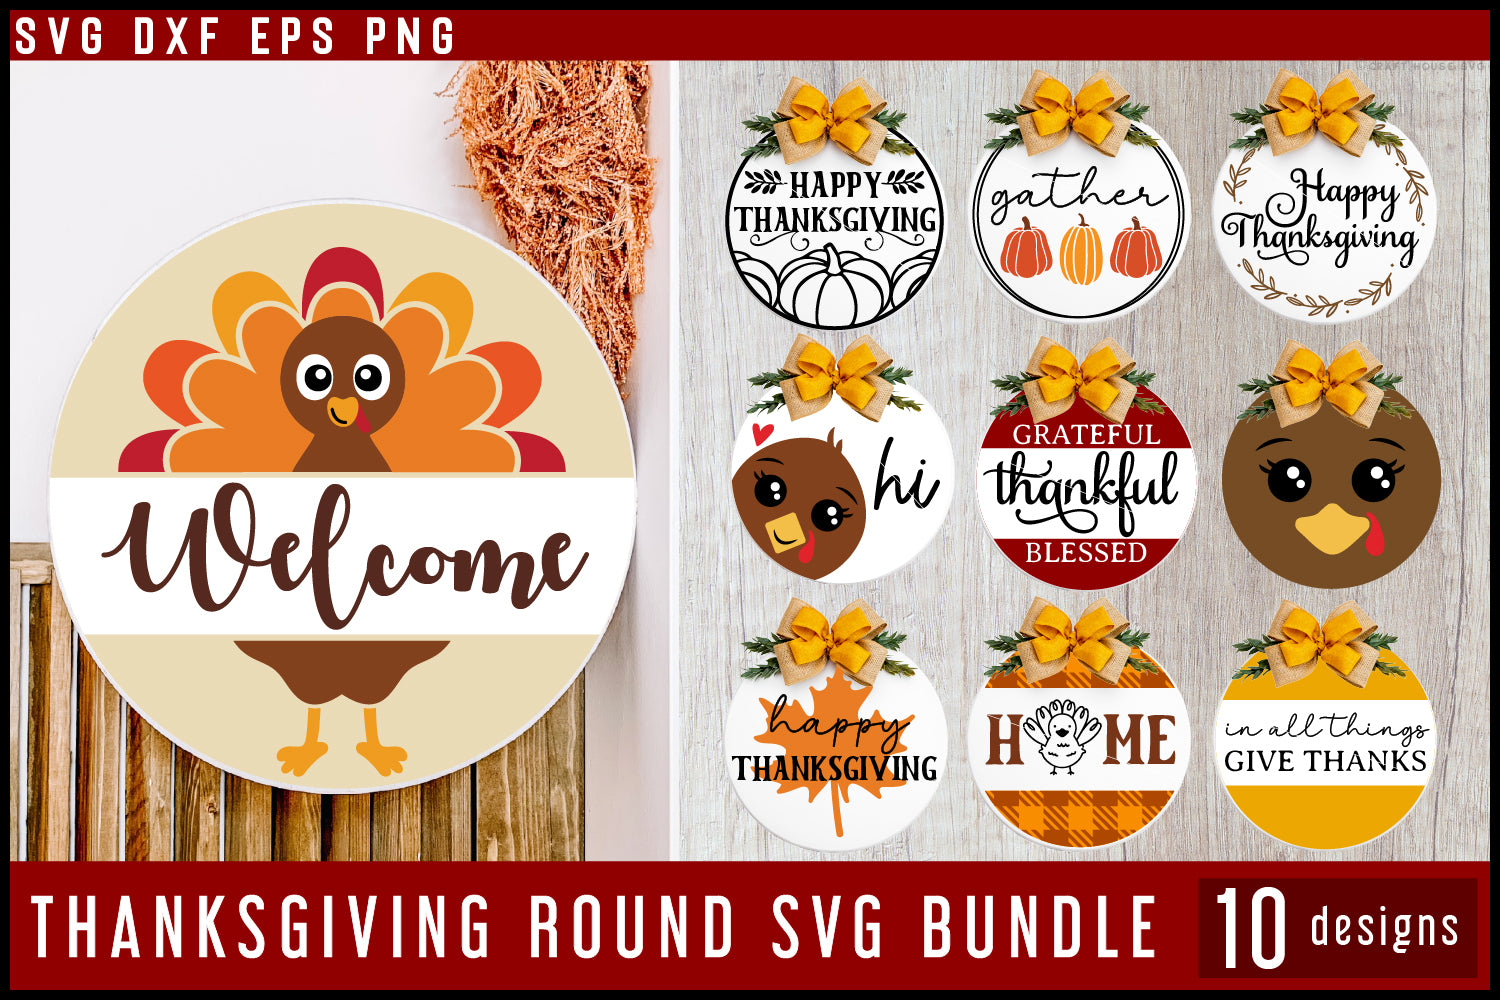 Thanksgiving Round Sign SVG Bundle